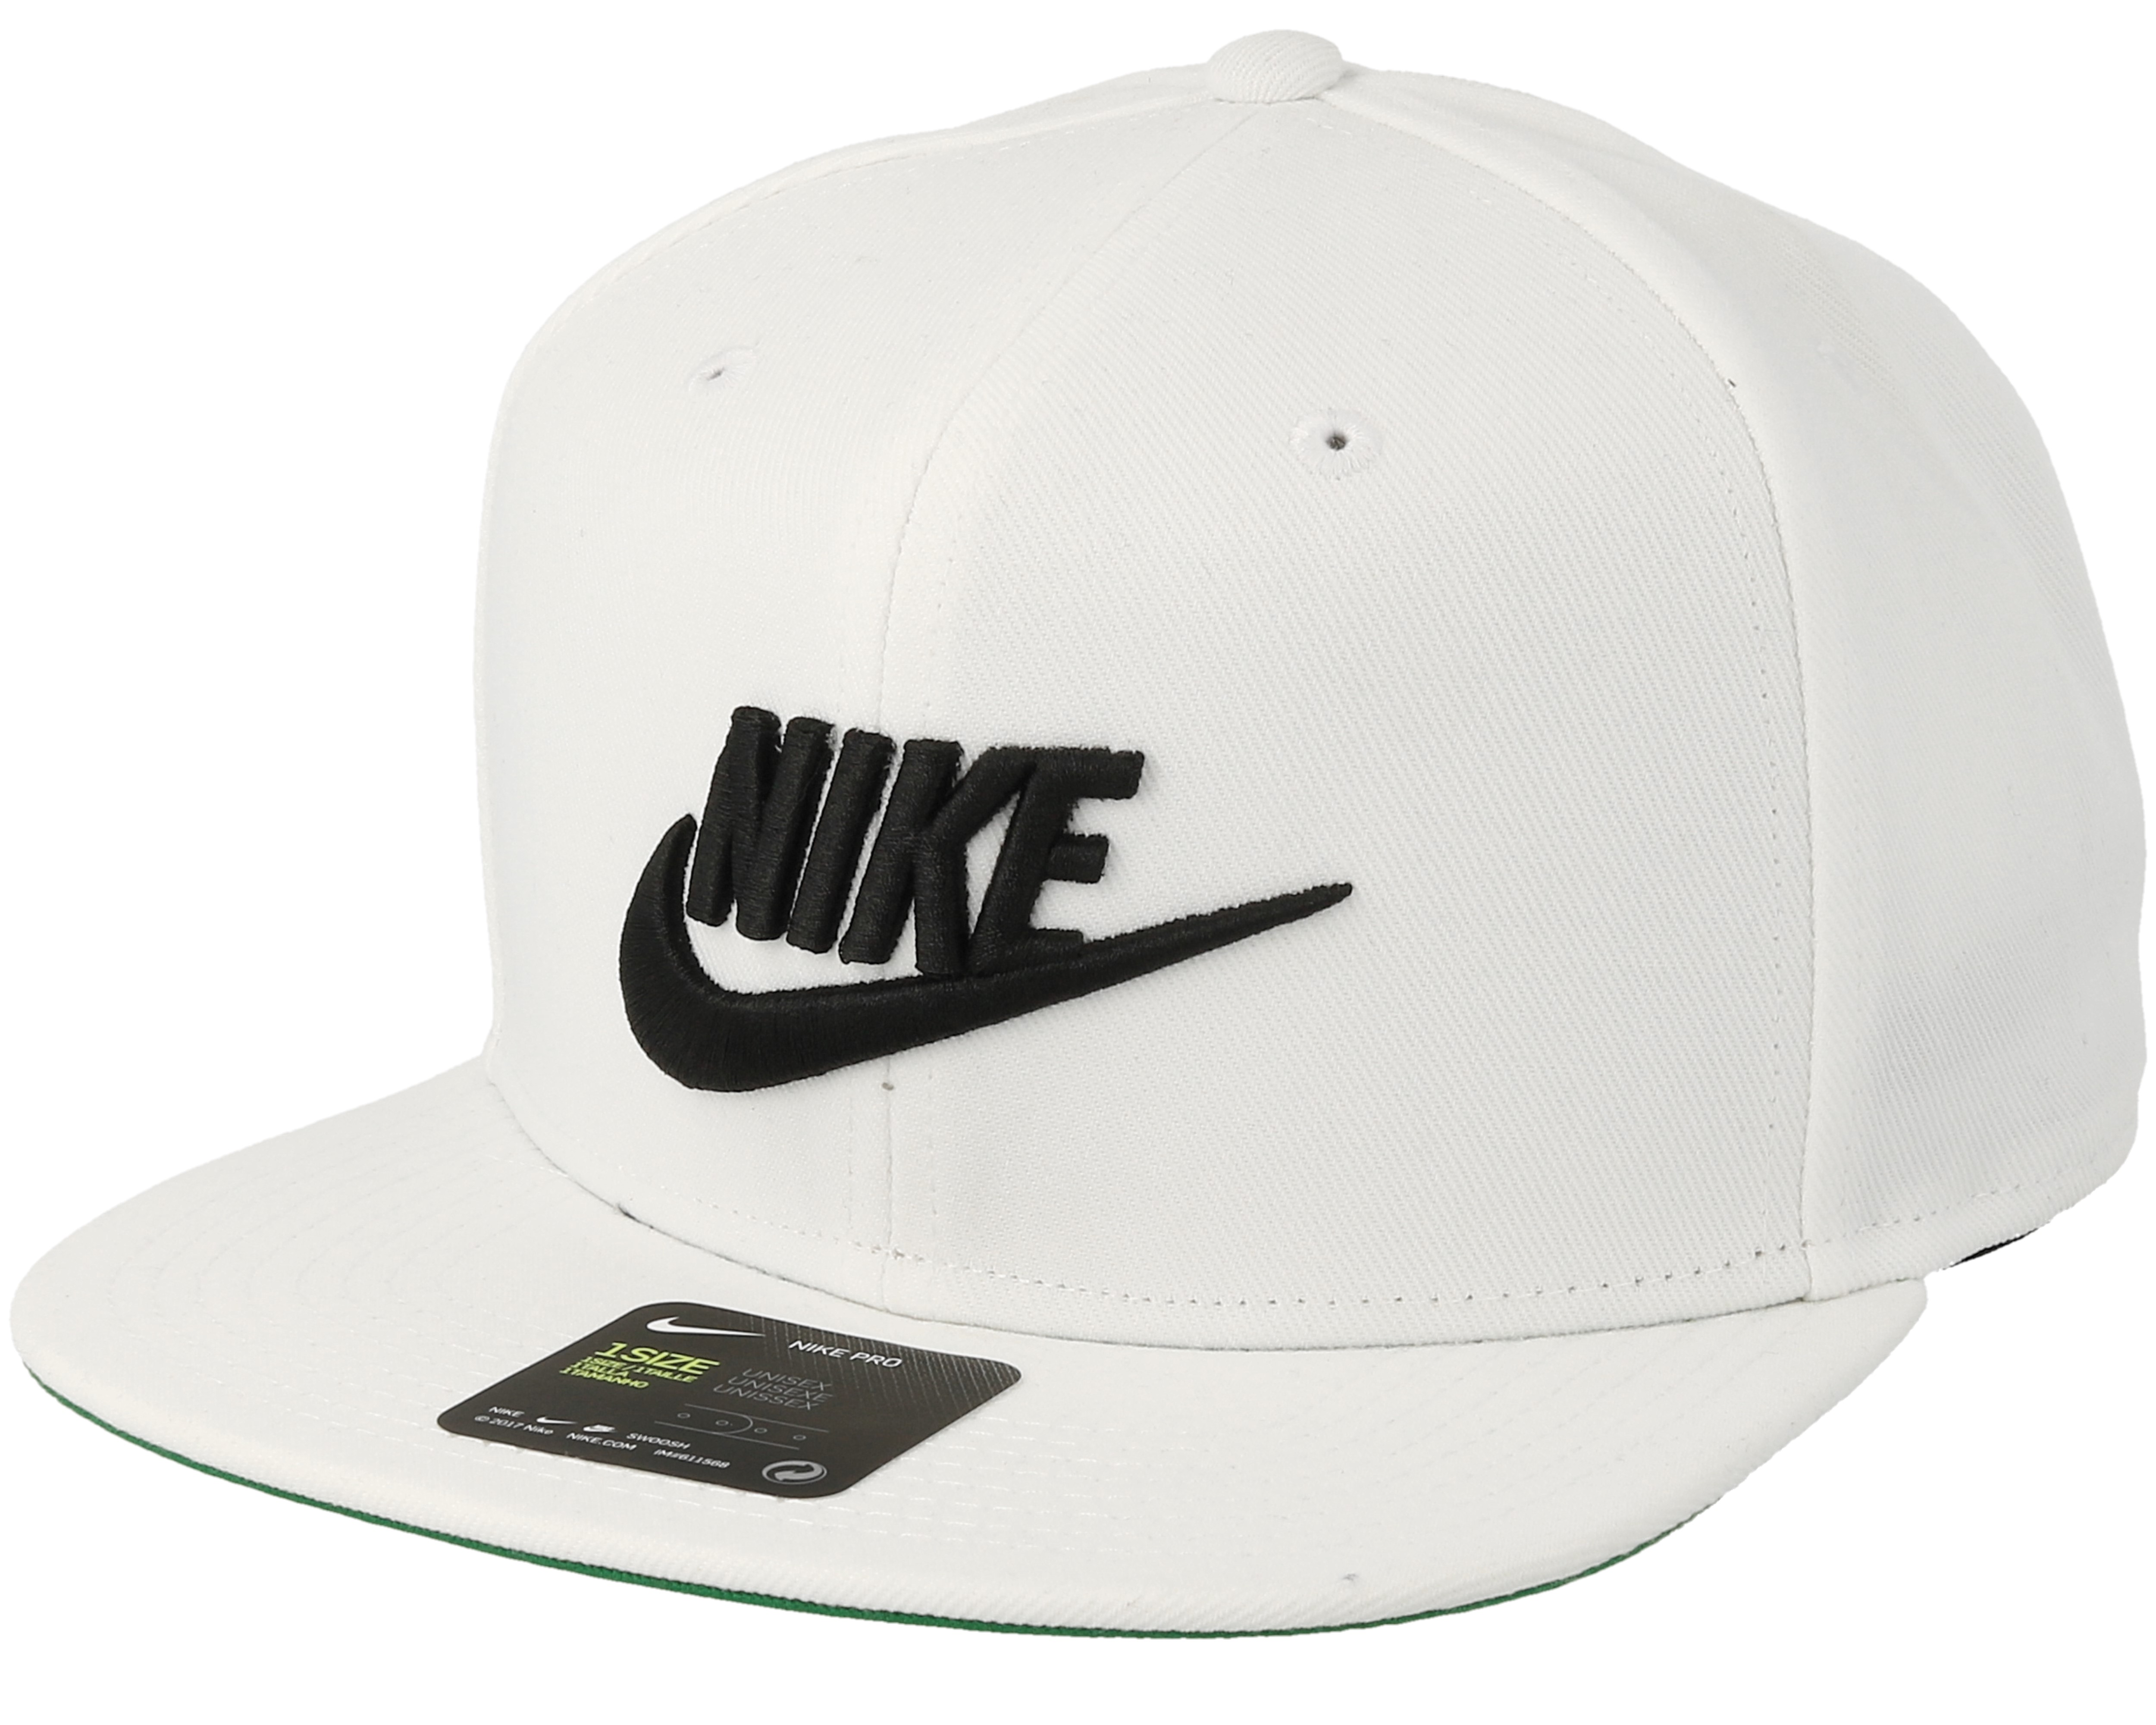 Future True White Snapback - Nike caps - Hatstoreworld.com